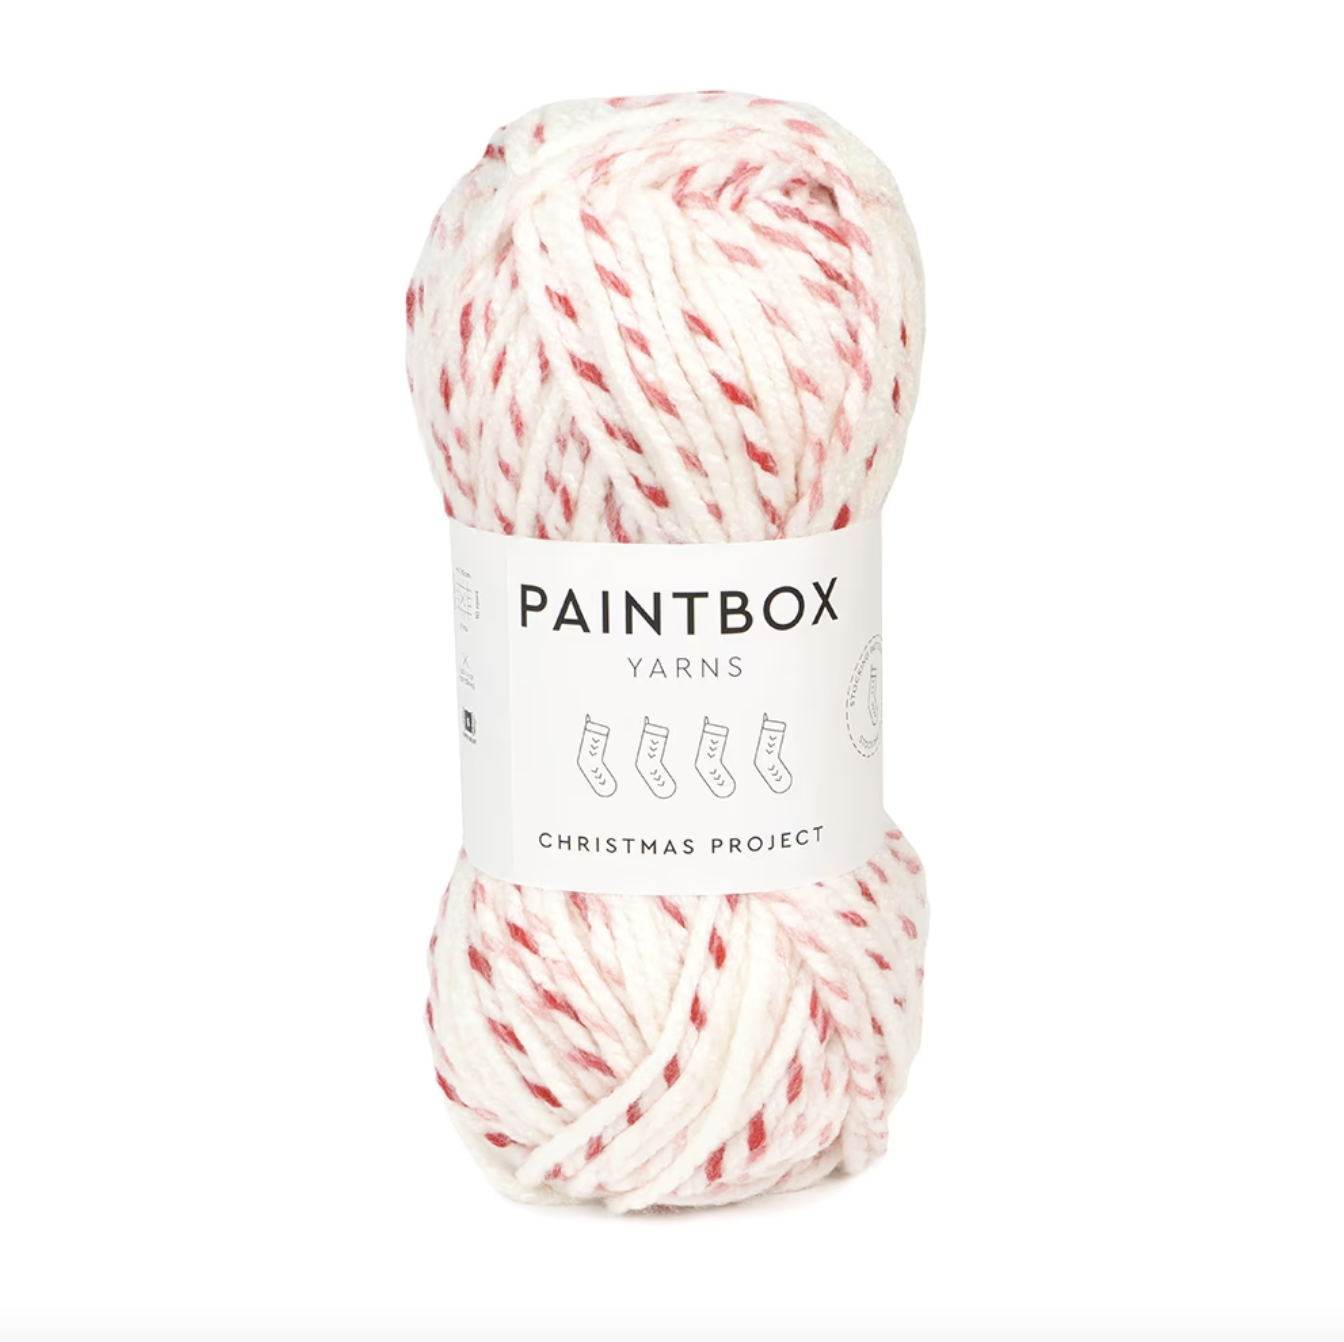 Yarns – Paintbox Yarns